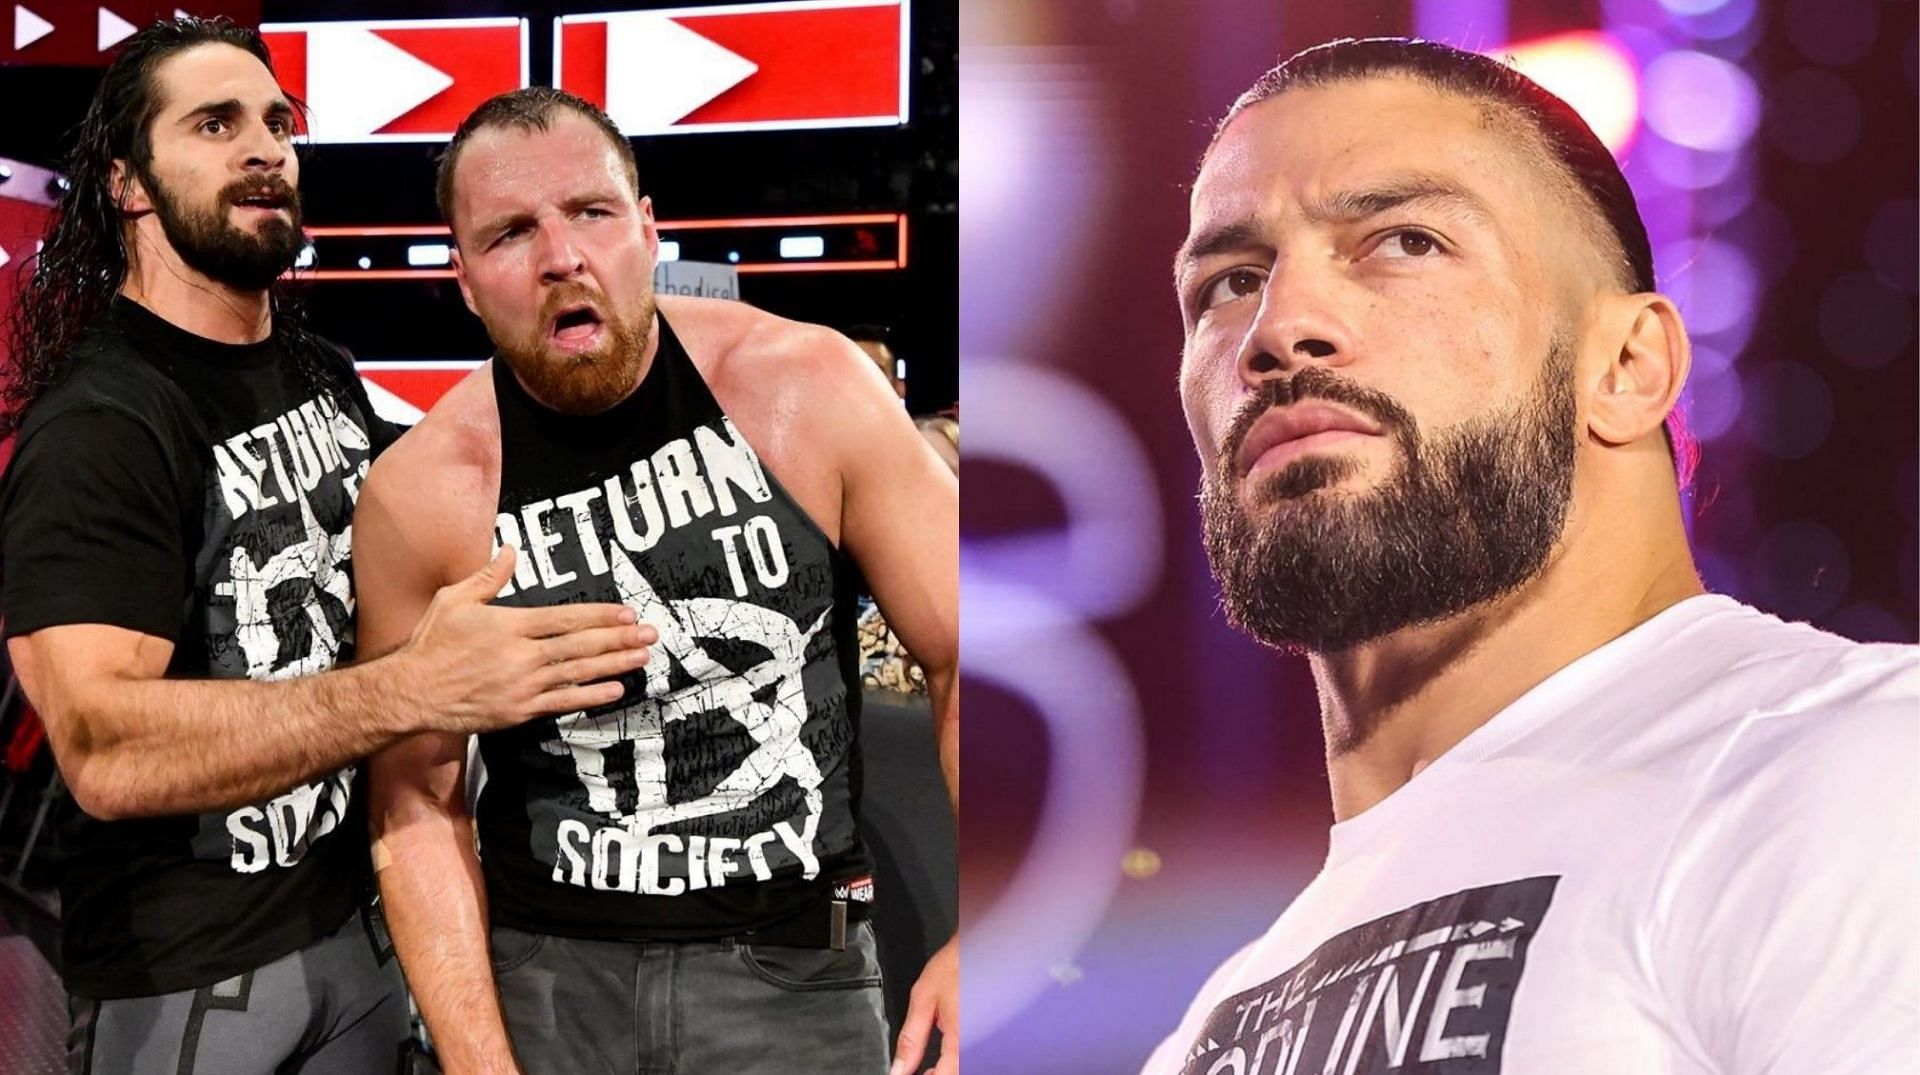 Will The Shield ever reunite in WWE?